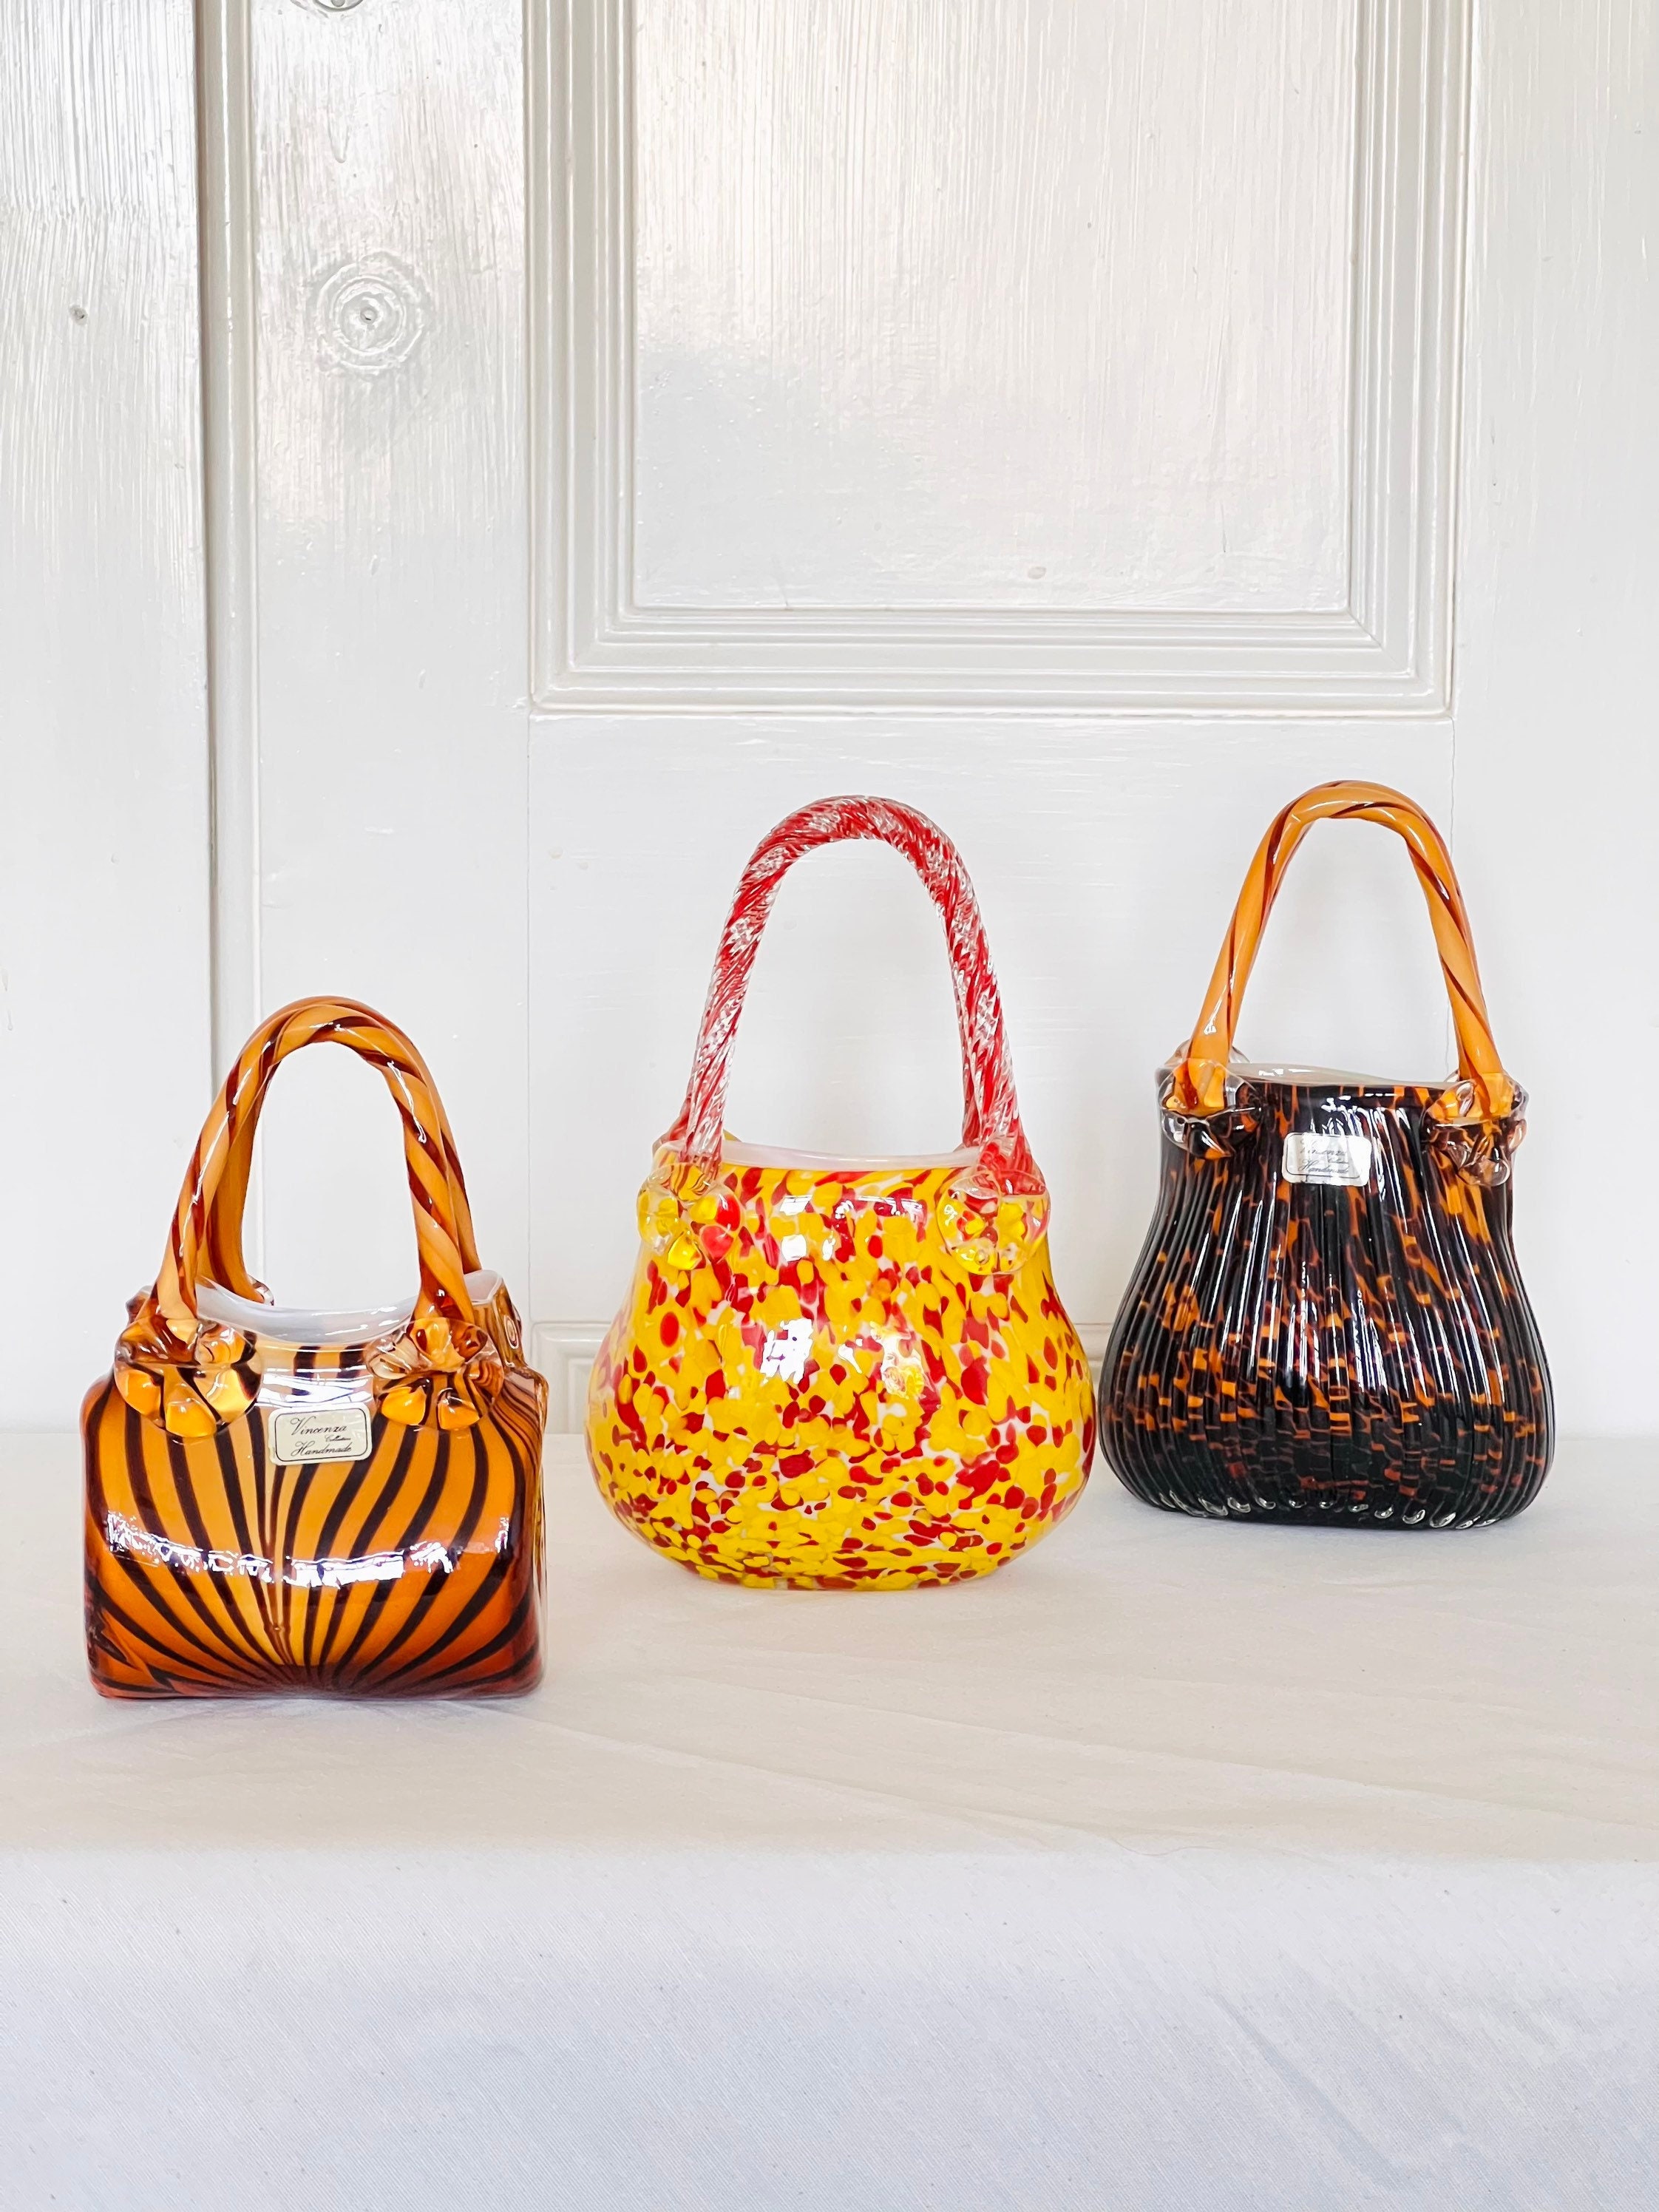 Olivia Glass Handbag Vase